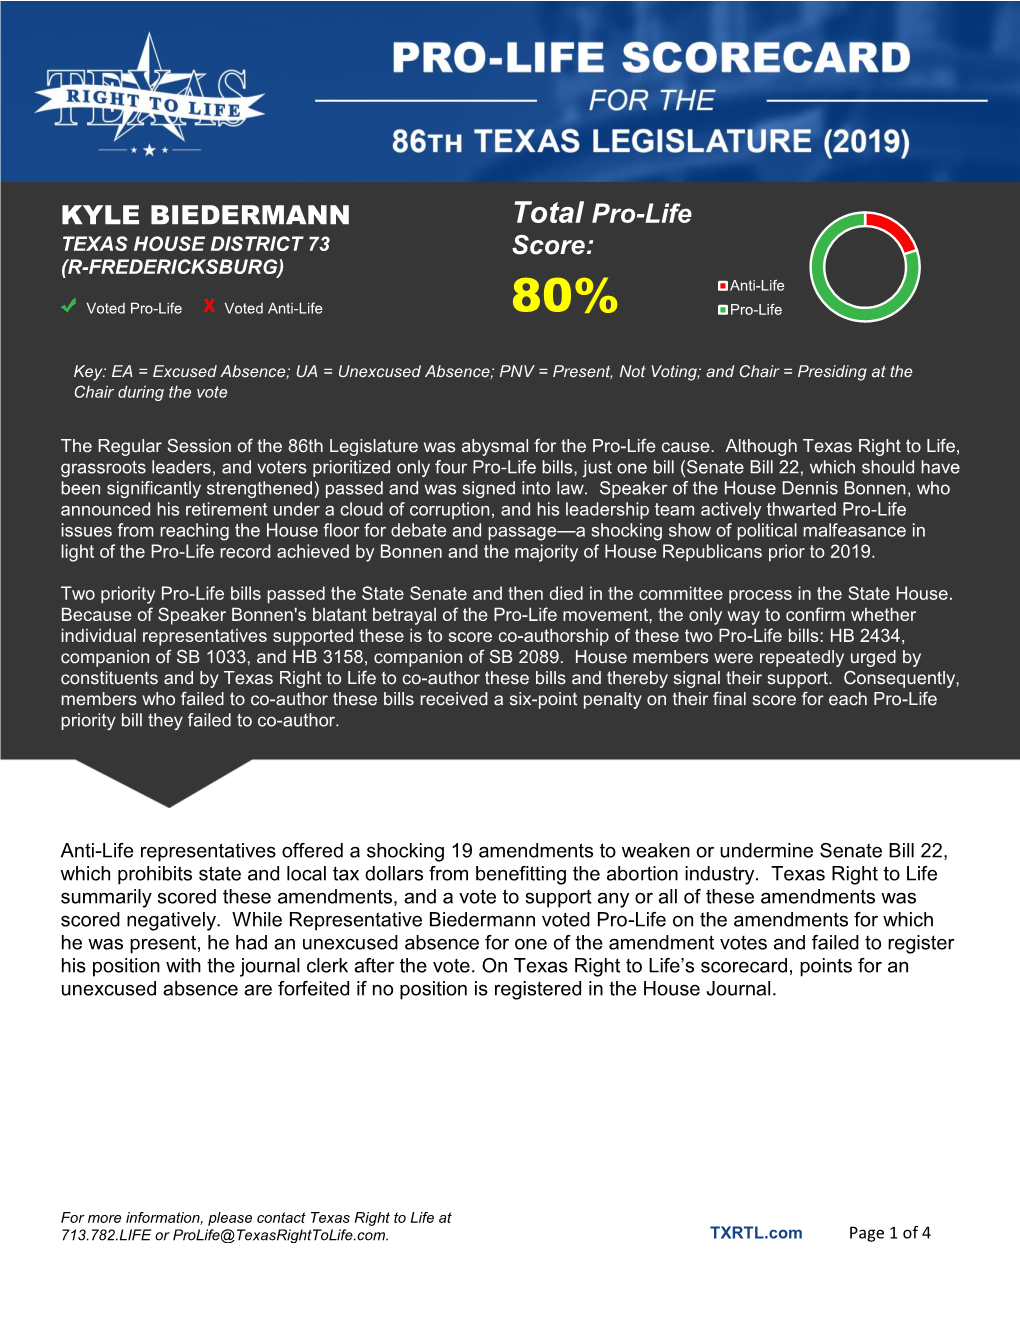 KYLE BIEDERMANN Total Pro-Life Score